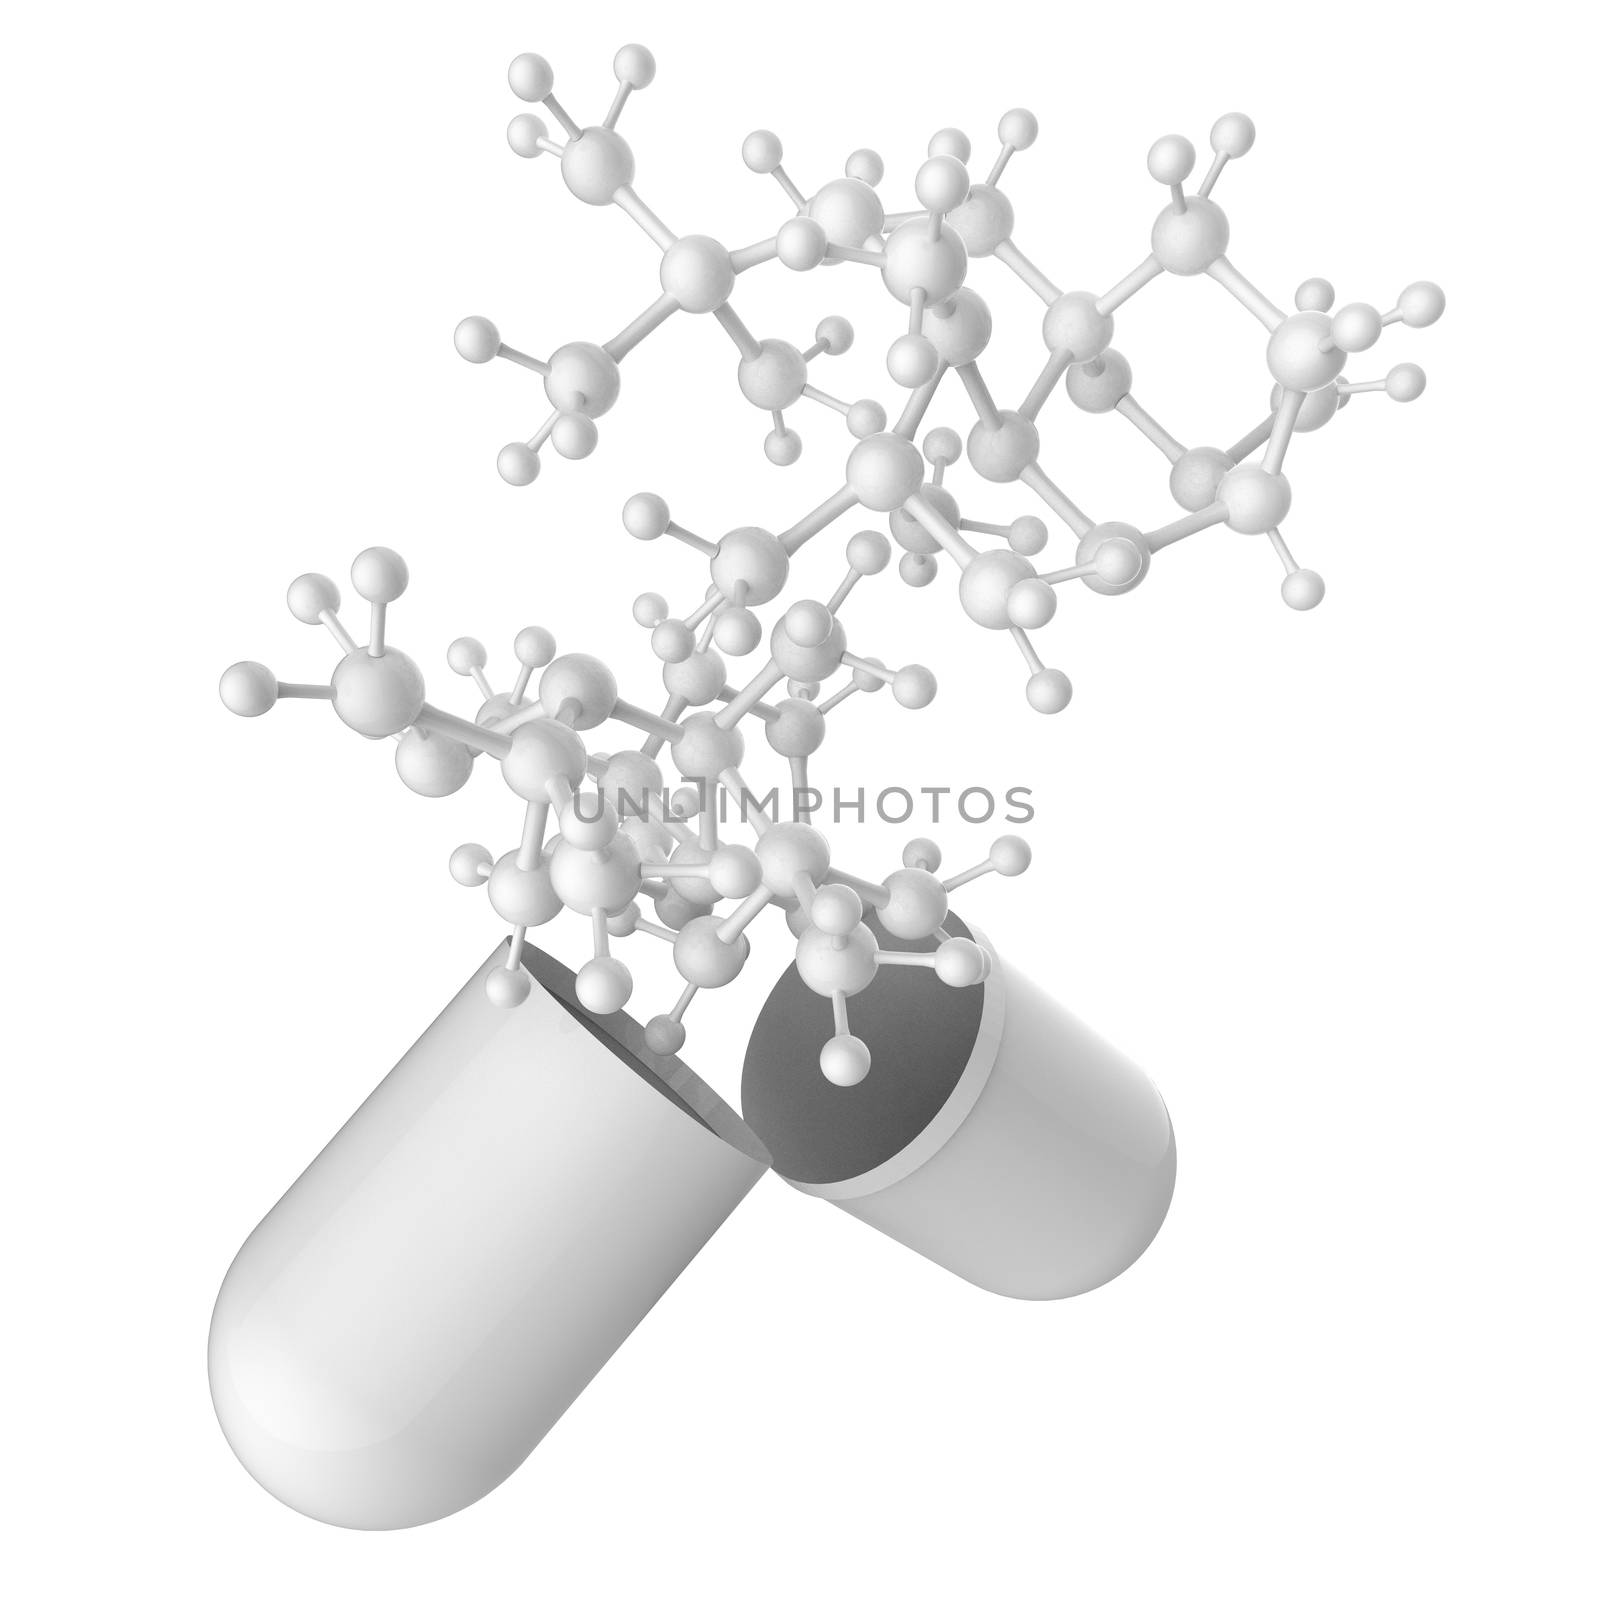 capsule shows molecule as medical concept